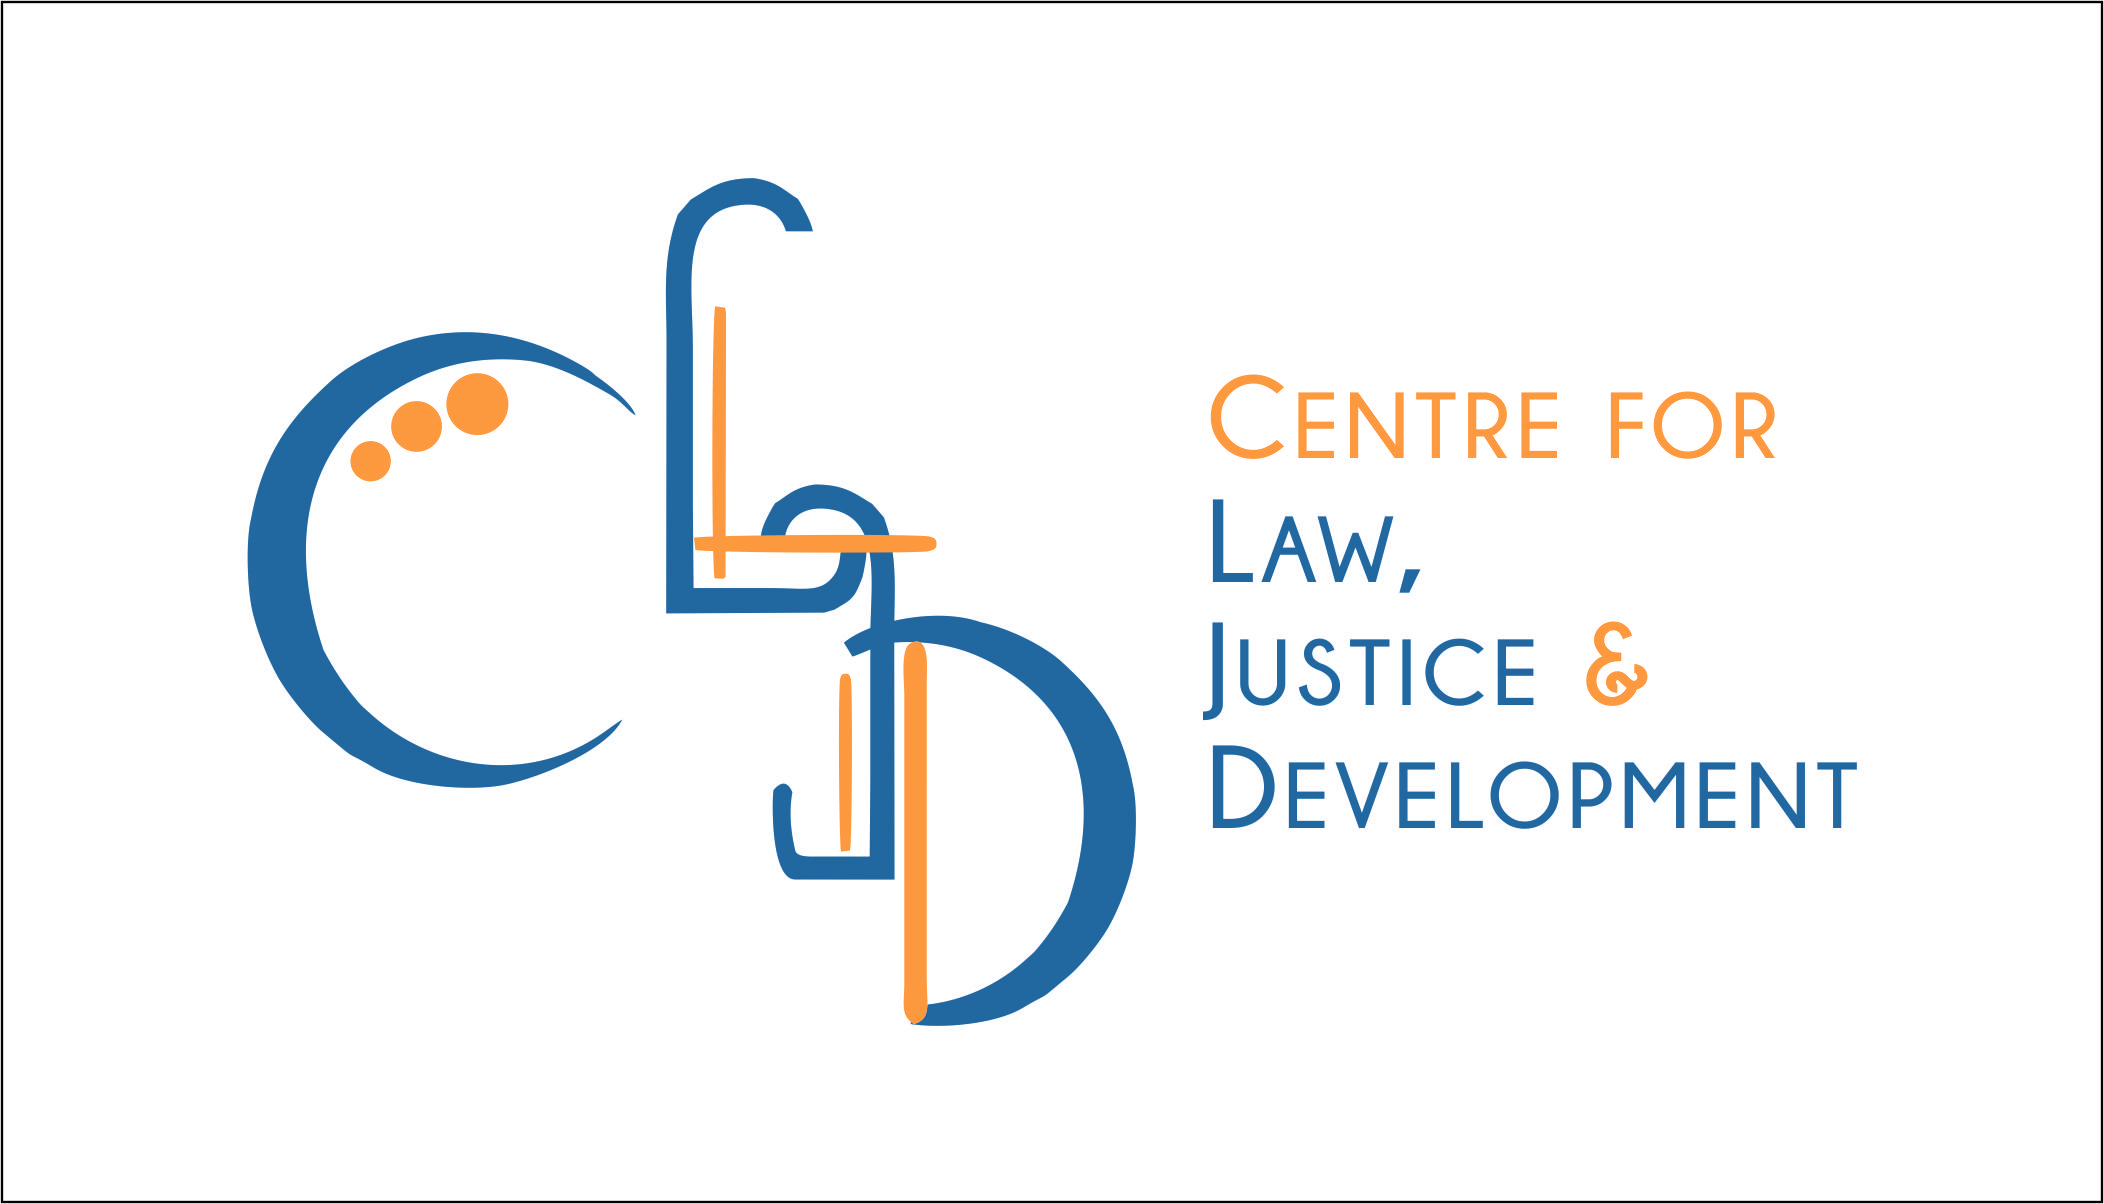 National Law University Delhi - Centre for Law, Justice & Development